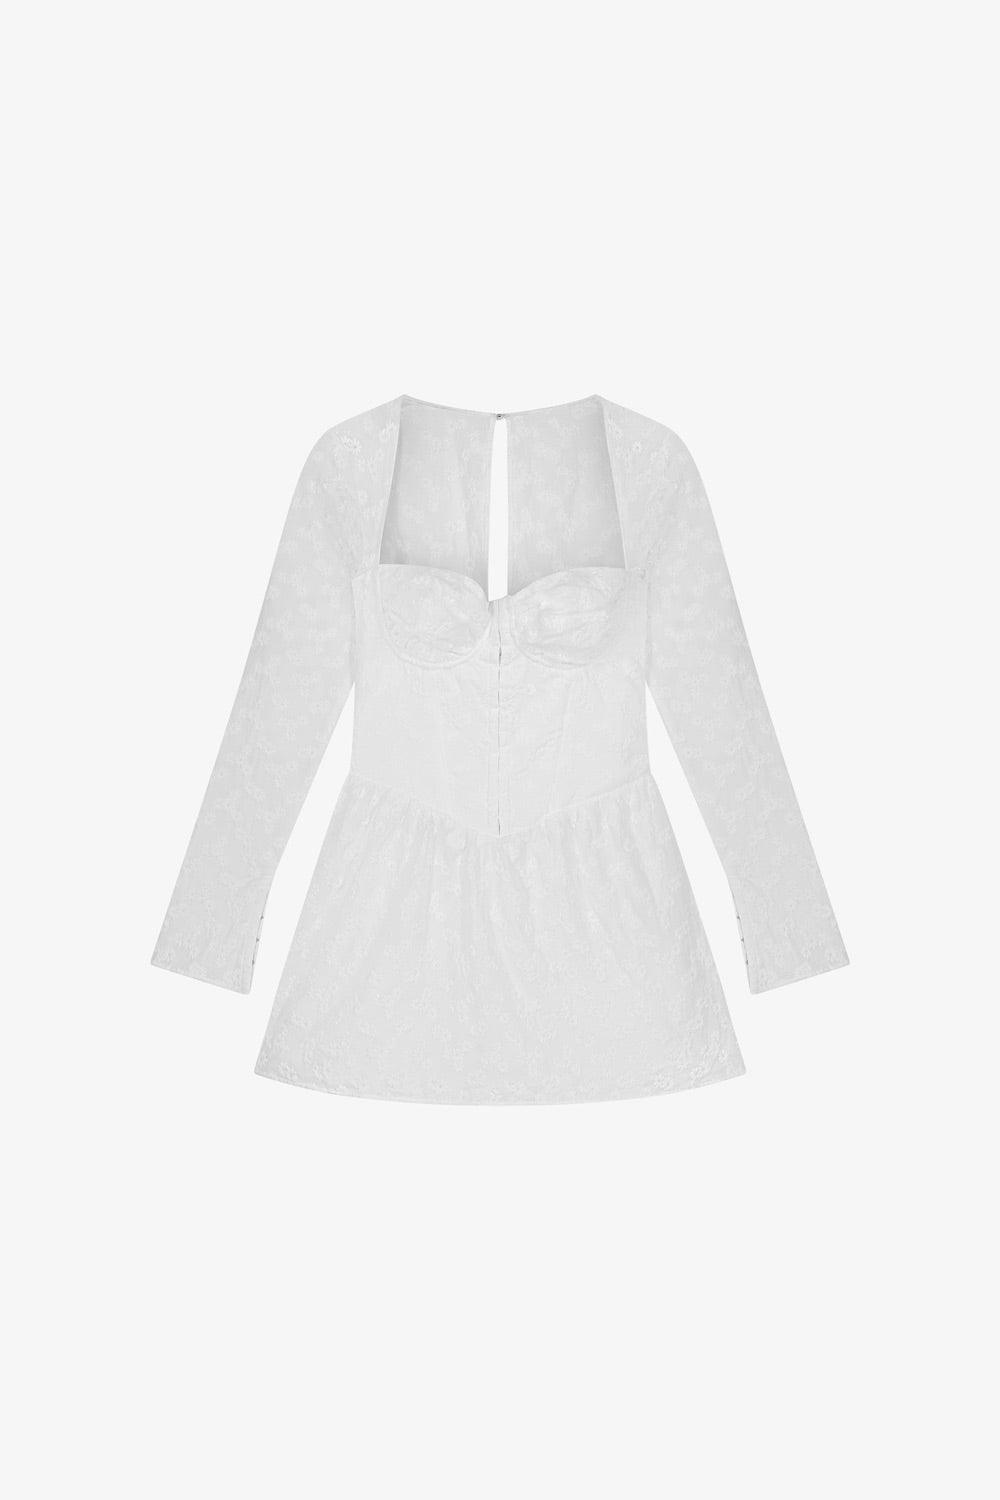 FLORAL CORSET DRESS WHITE